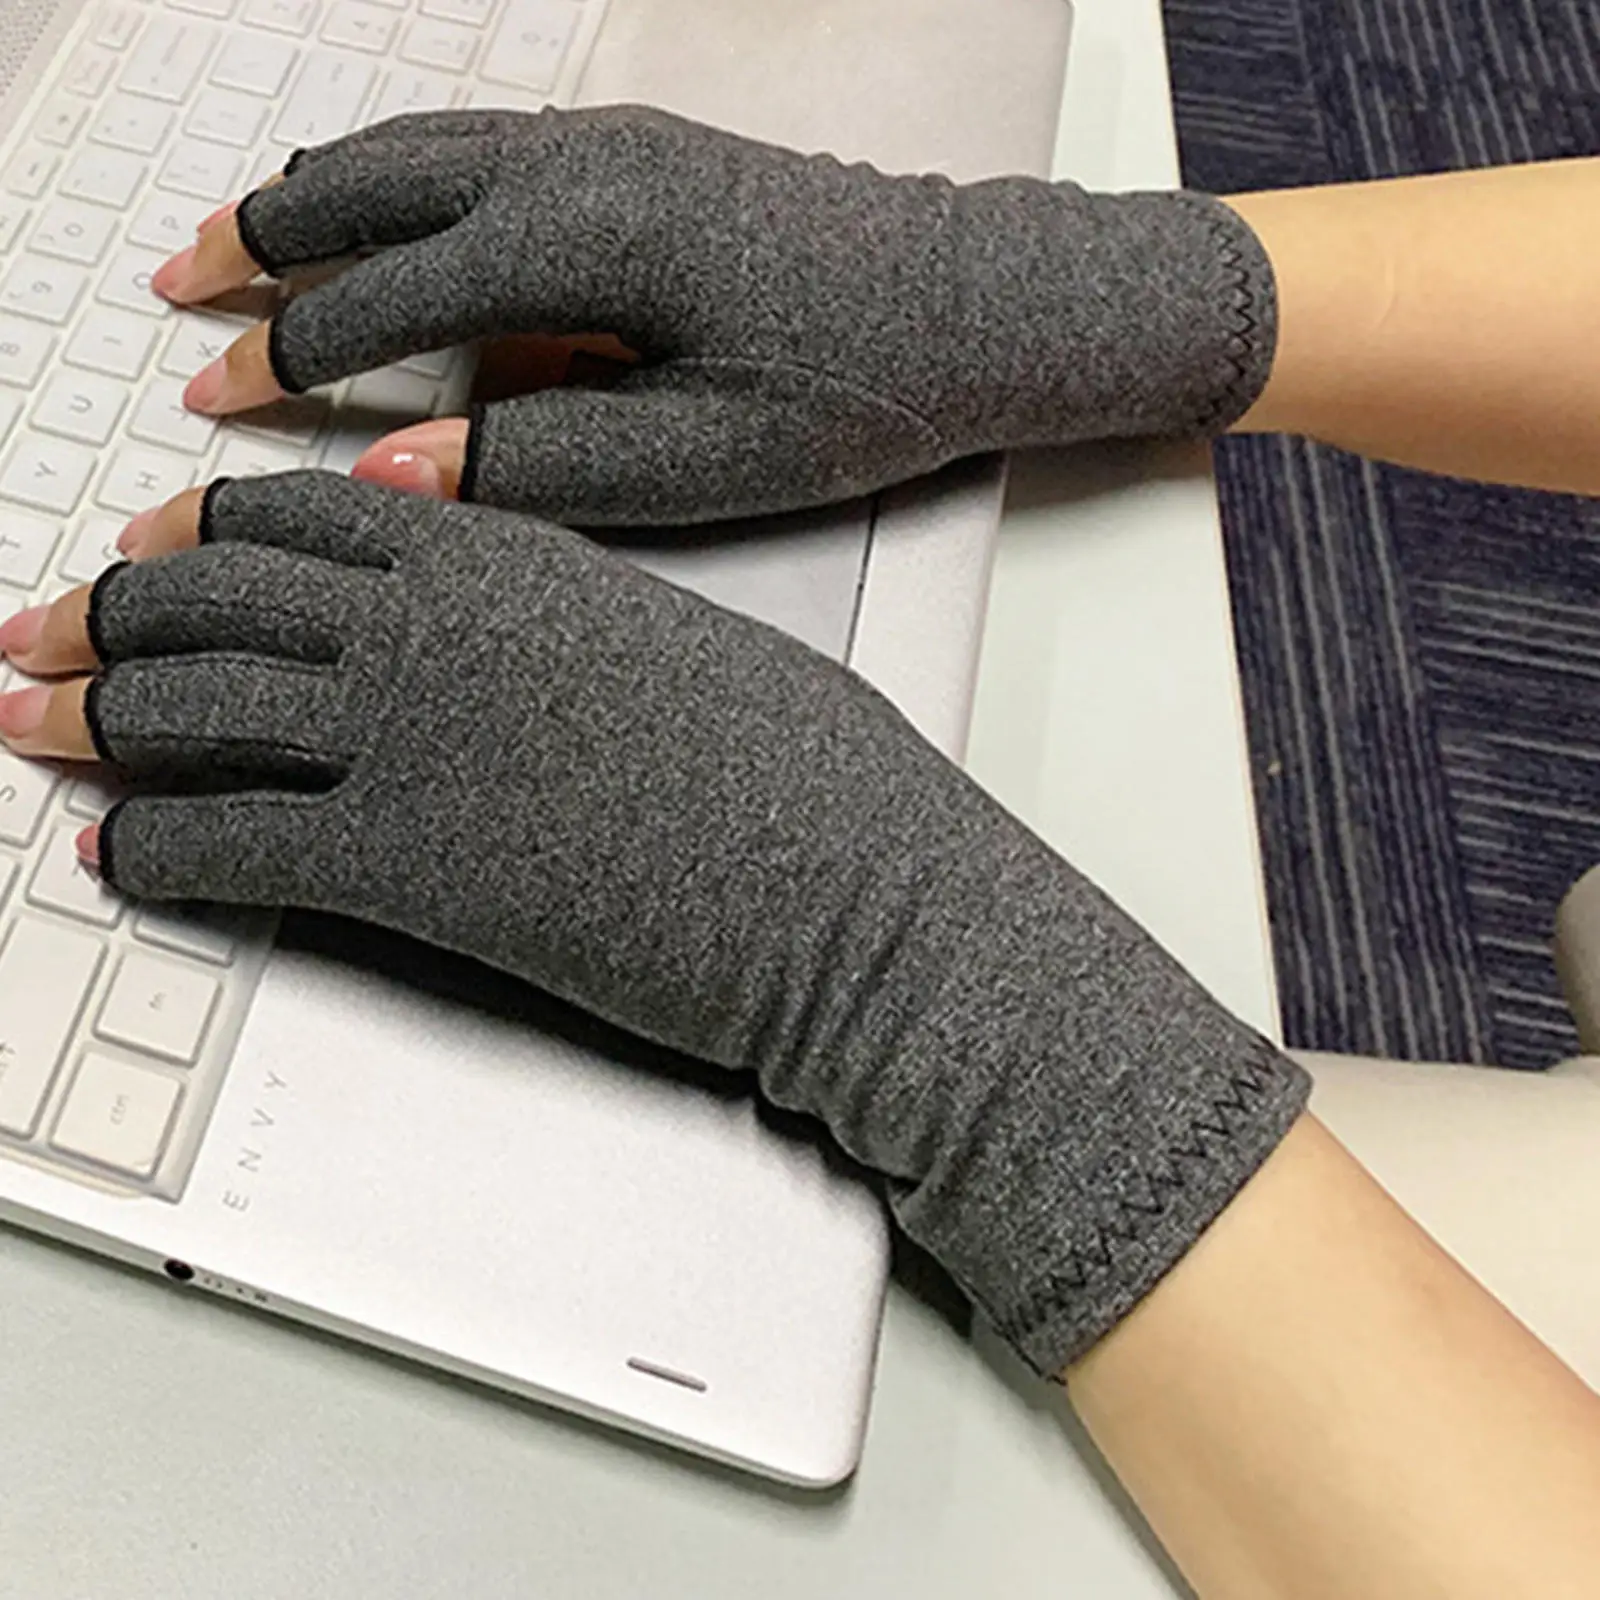 Fingerless Arthritis Compression Gloves Hand Gloves Fingerless Arthritis Gloves for Increase Blood Flow Computer Typing Fitness